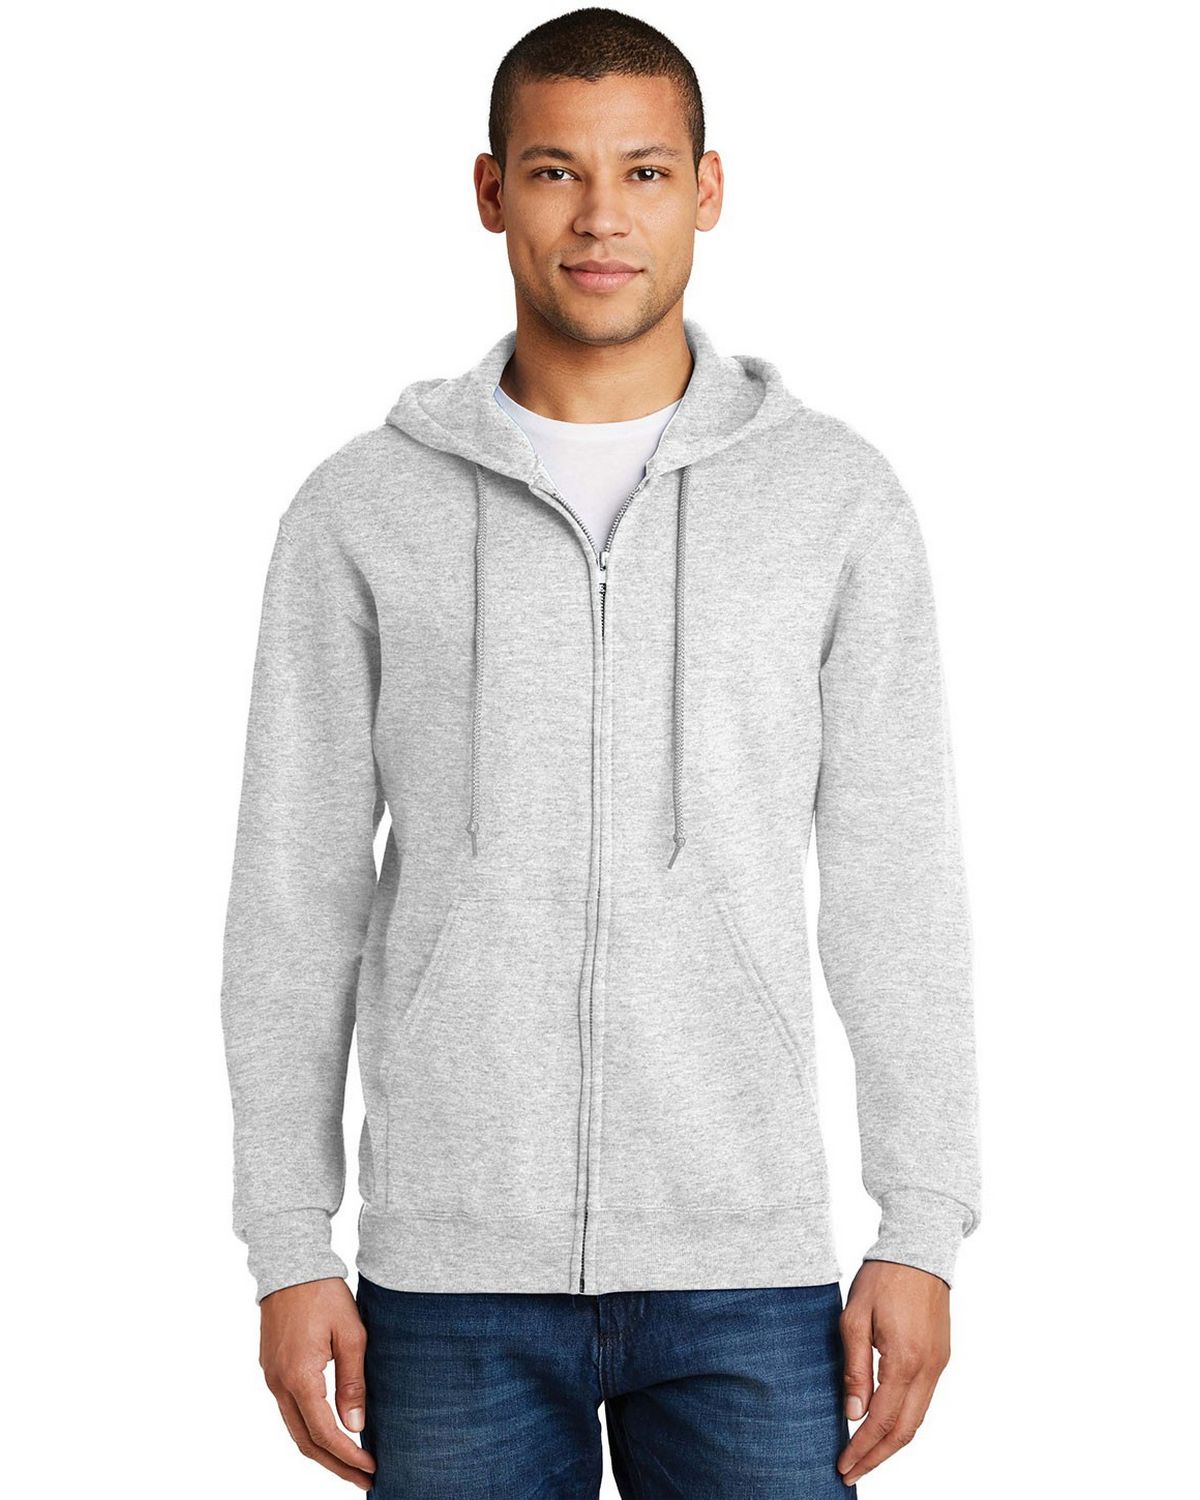 Size Chart for Jerzees 993M NuBlend Full-Zip Hooded Sweatshirt